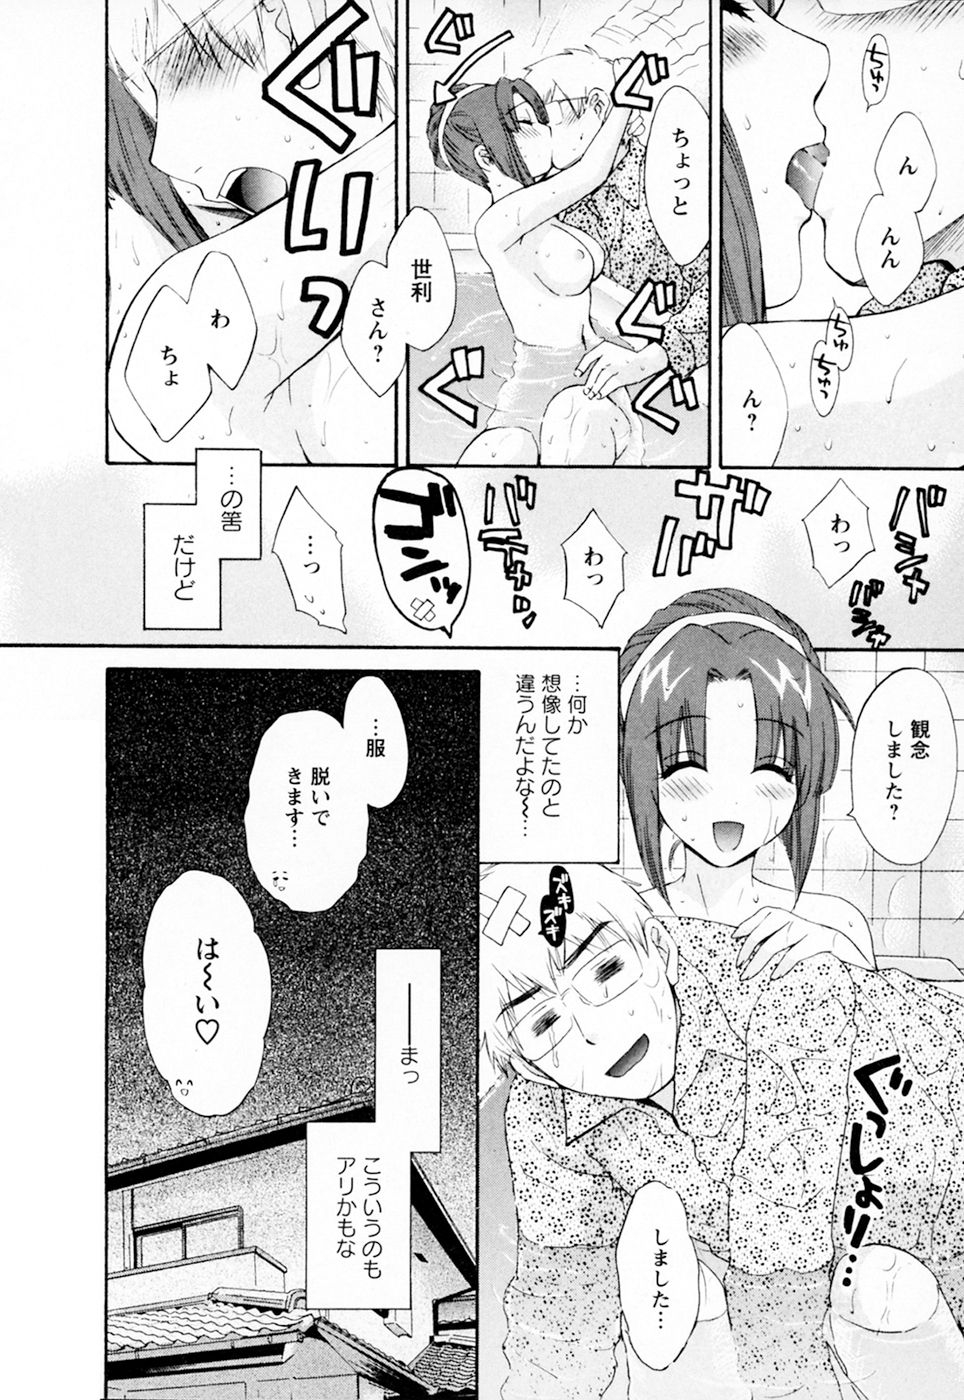 [Pon Takahanada] Kanojo to Kurasu 100 no Houhou - A hundred of the way of living with her. 37